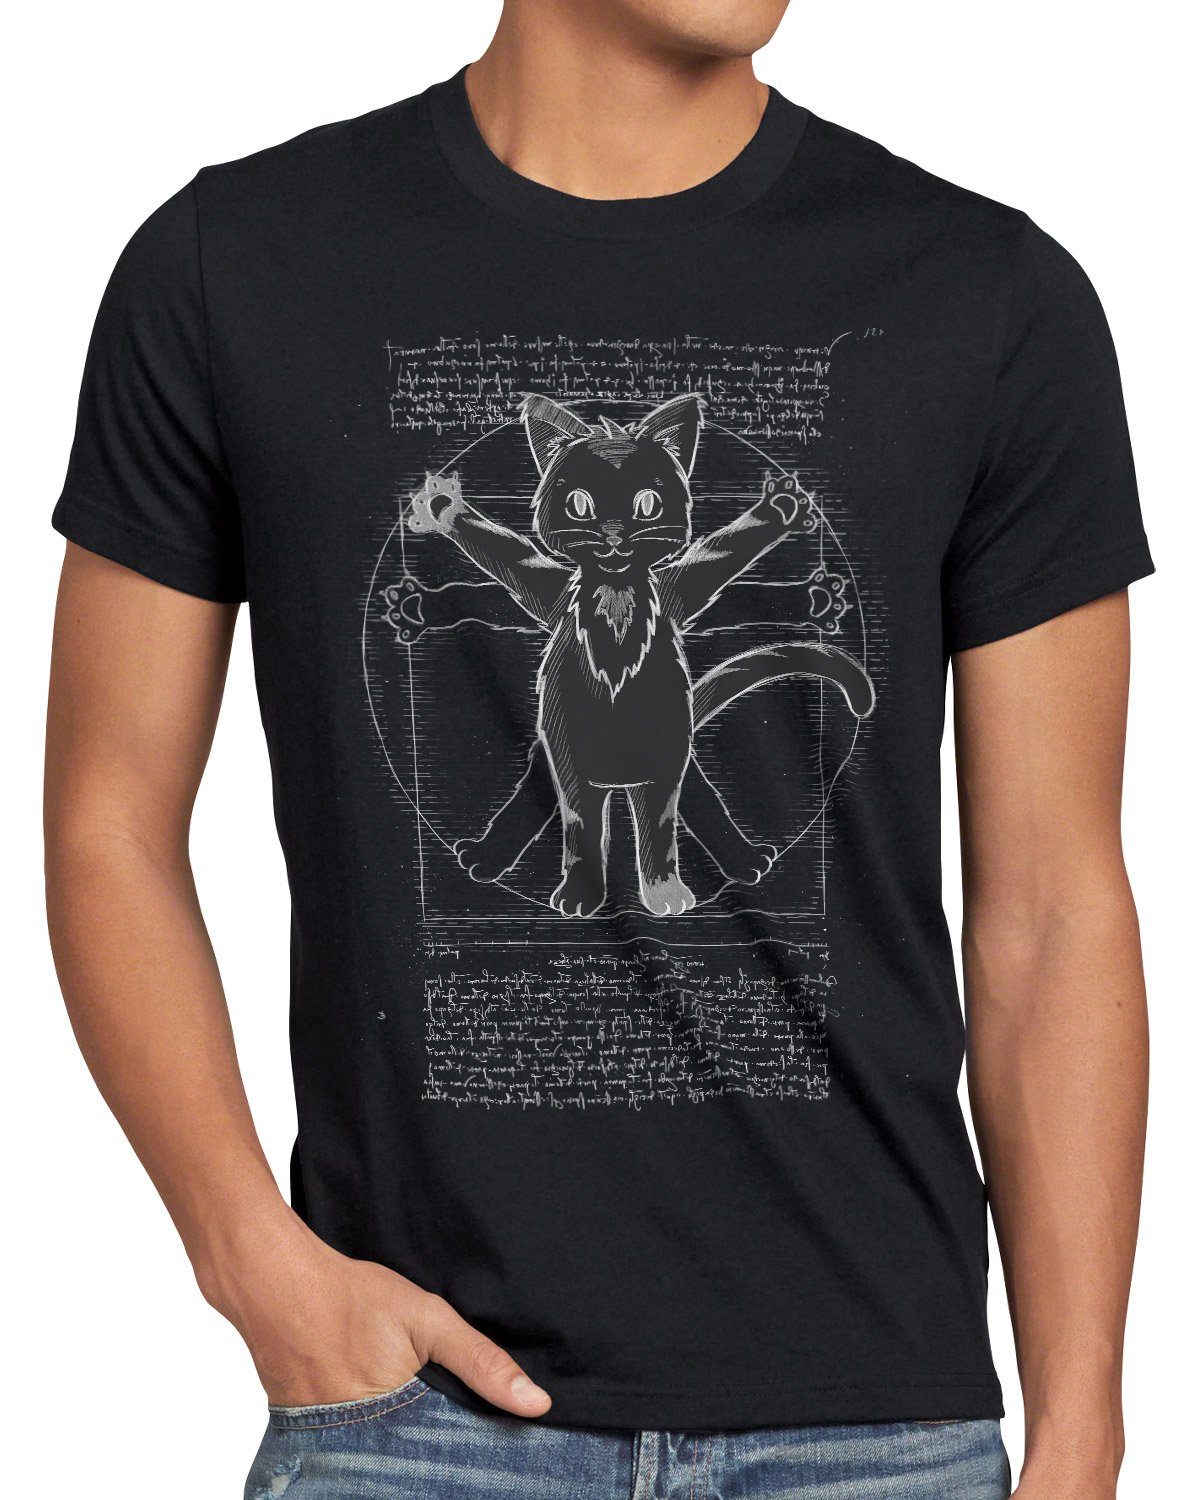 T-Shirt vinci da tier style3 Vitruvianische Print-Shirt Katze kätzchen Herren schwarz